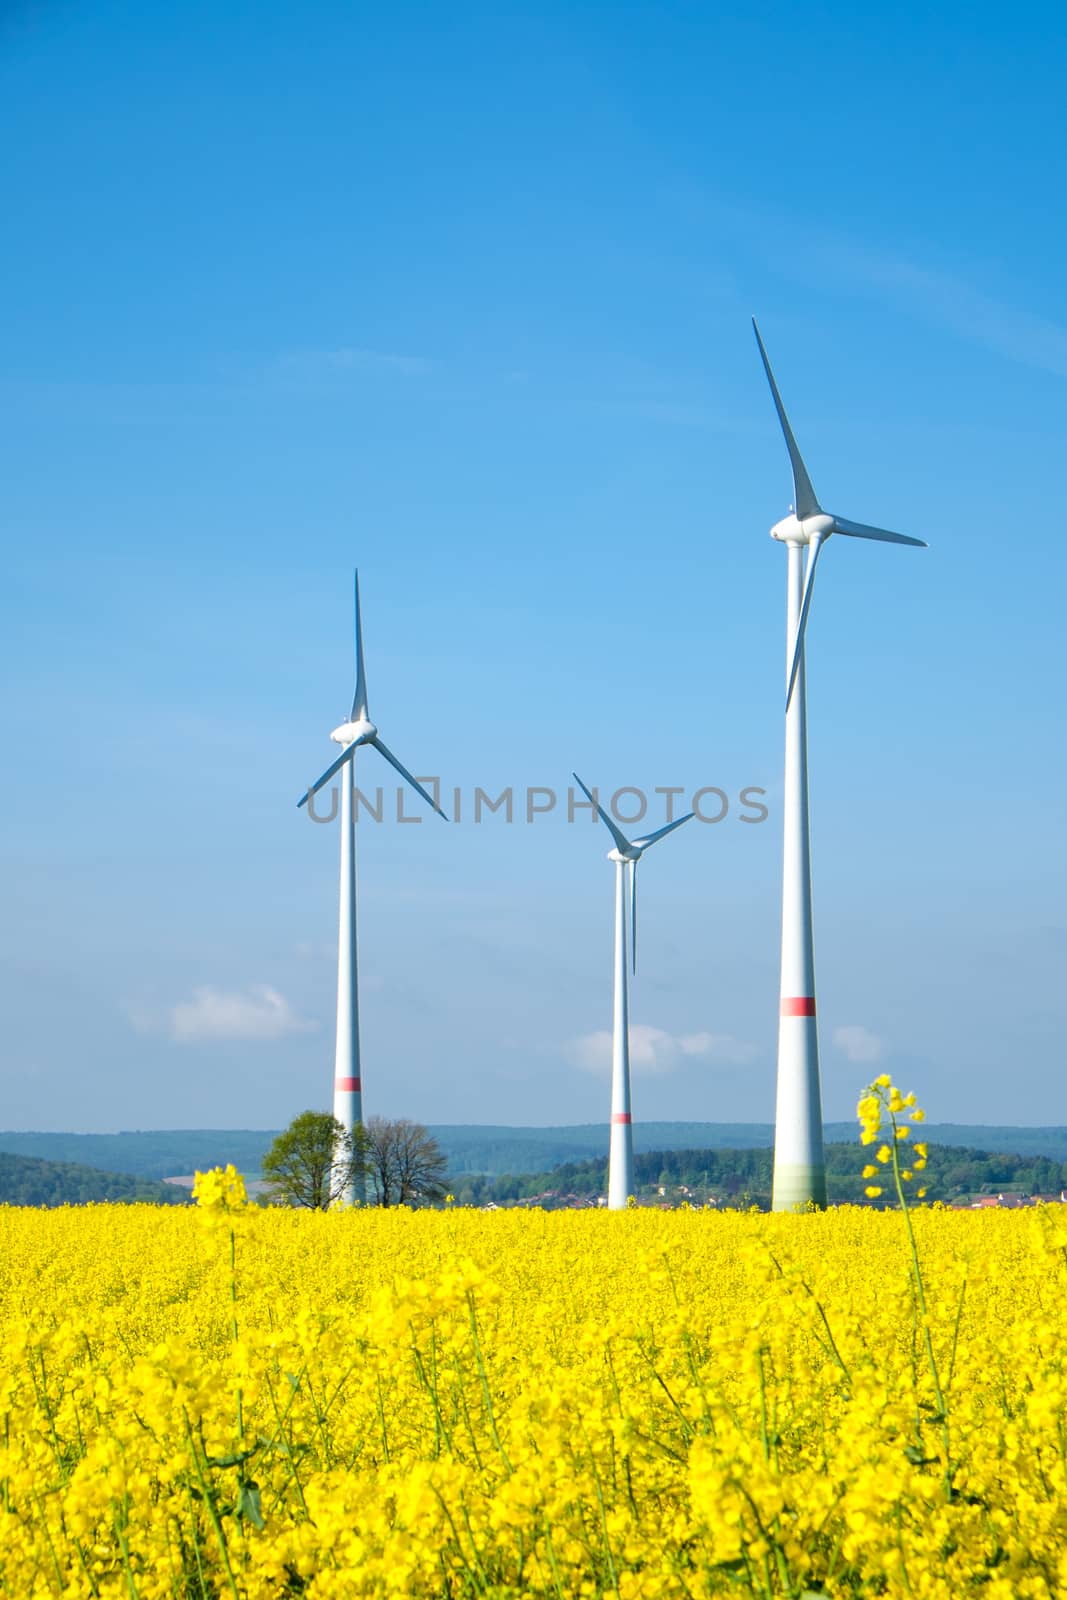 Windwheels standing behind a yellow rapeseed field